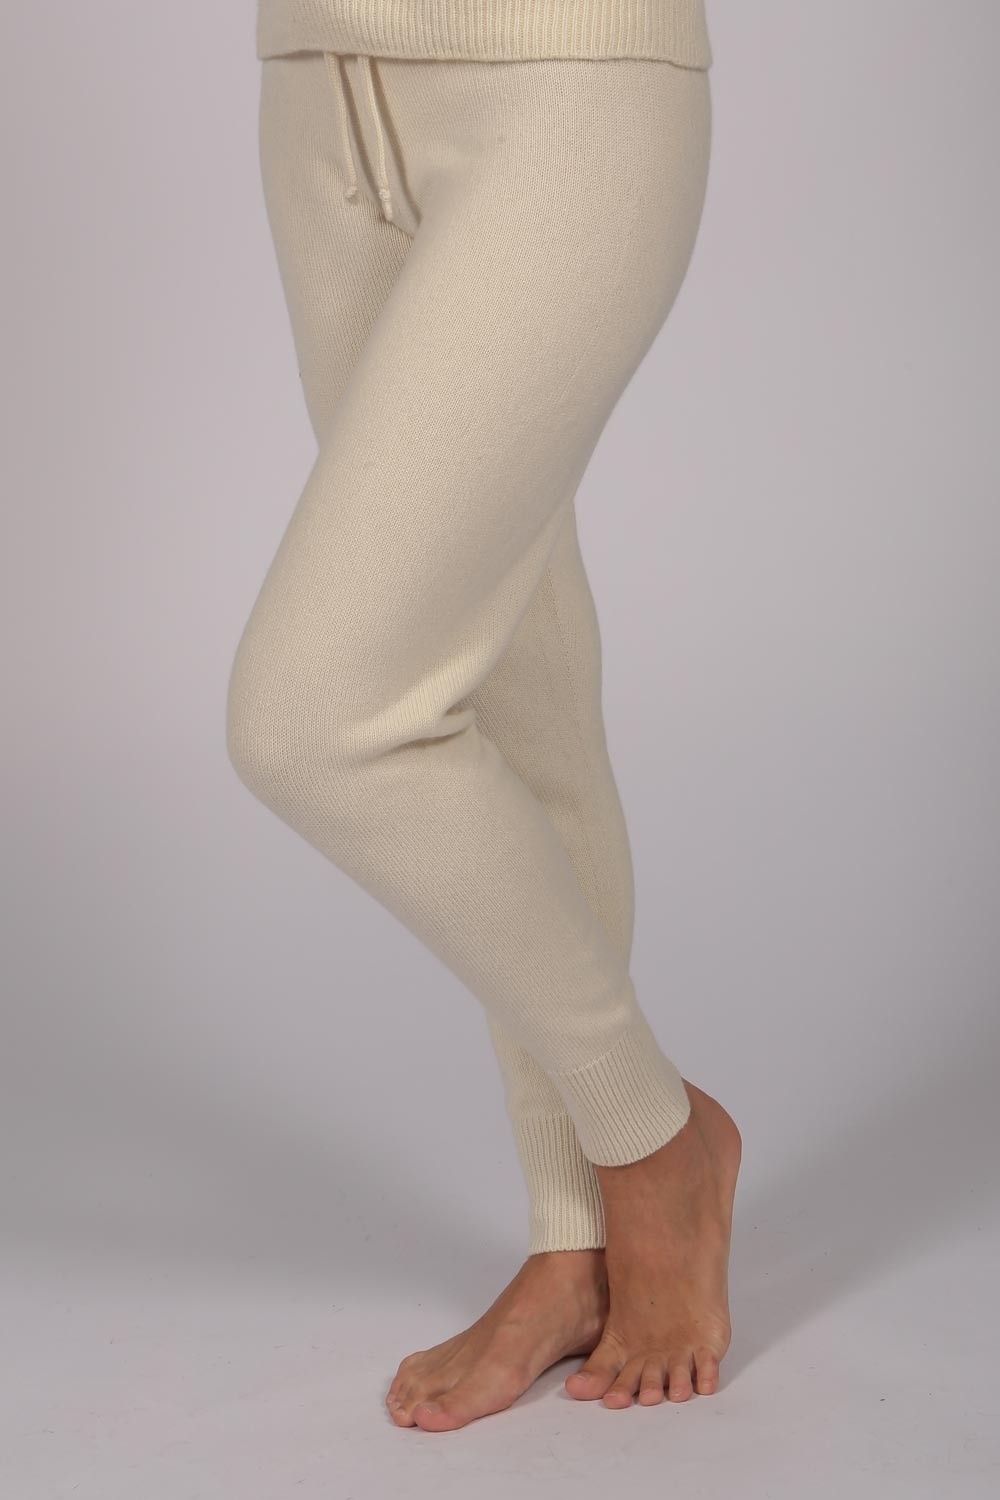 Pants - White cashmere pants